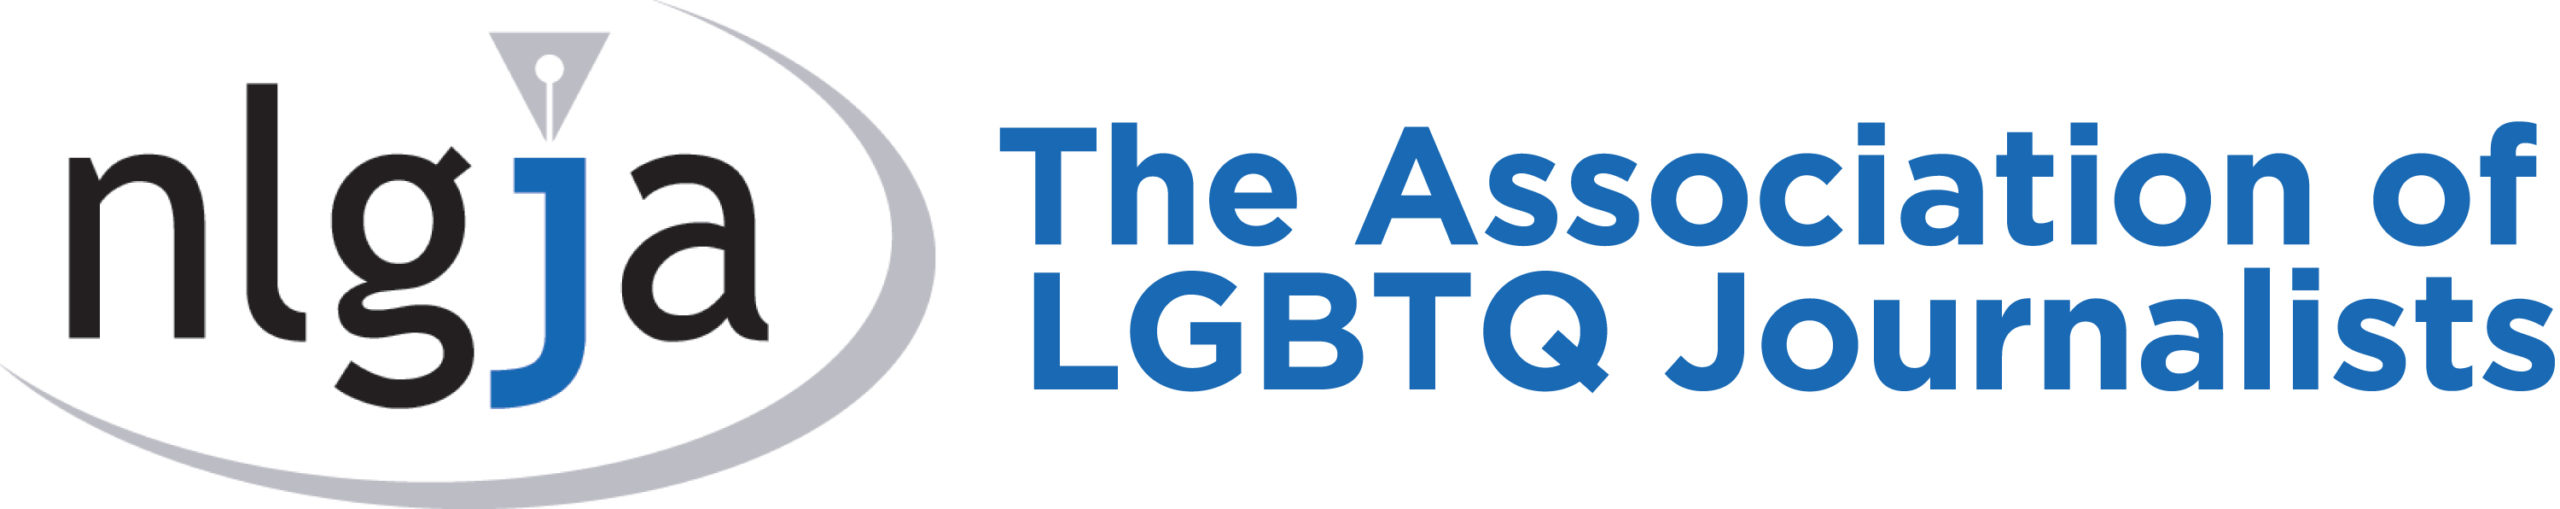 National Lesbian & Gay Journalists Association logo